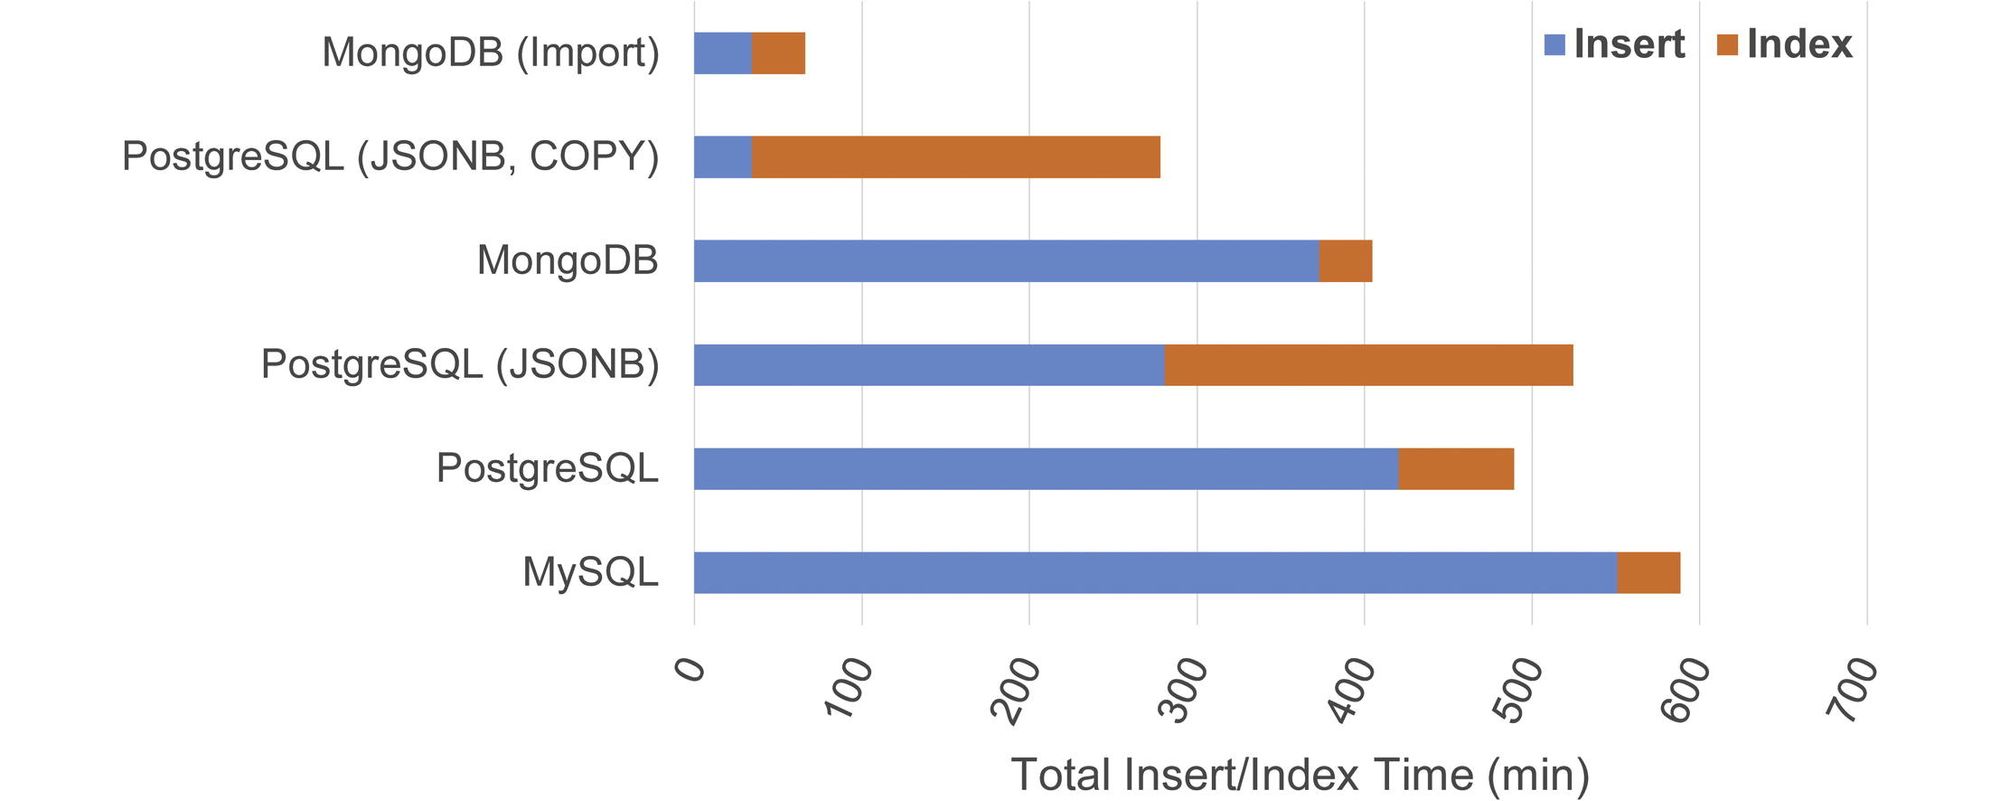 Bar graph demonstrating insert and index operation times for MongoDB, PostgreSQL, and MySQL.